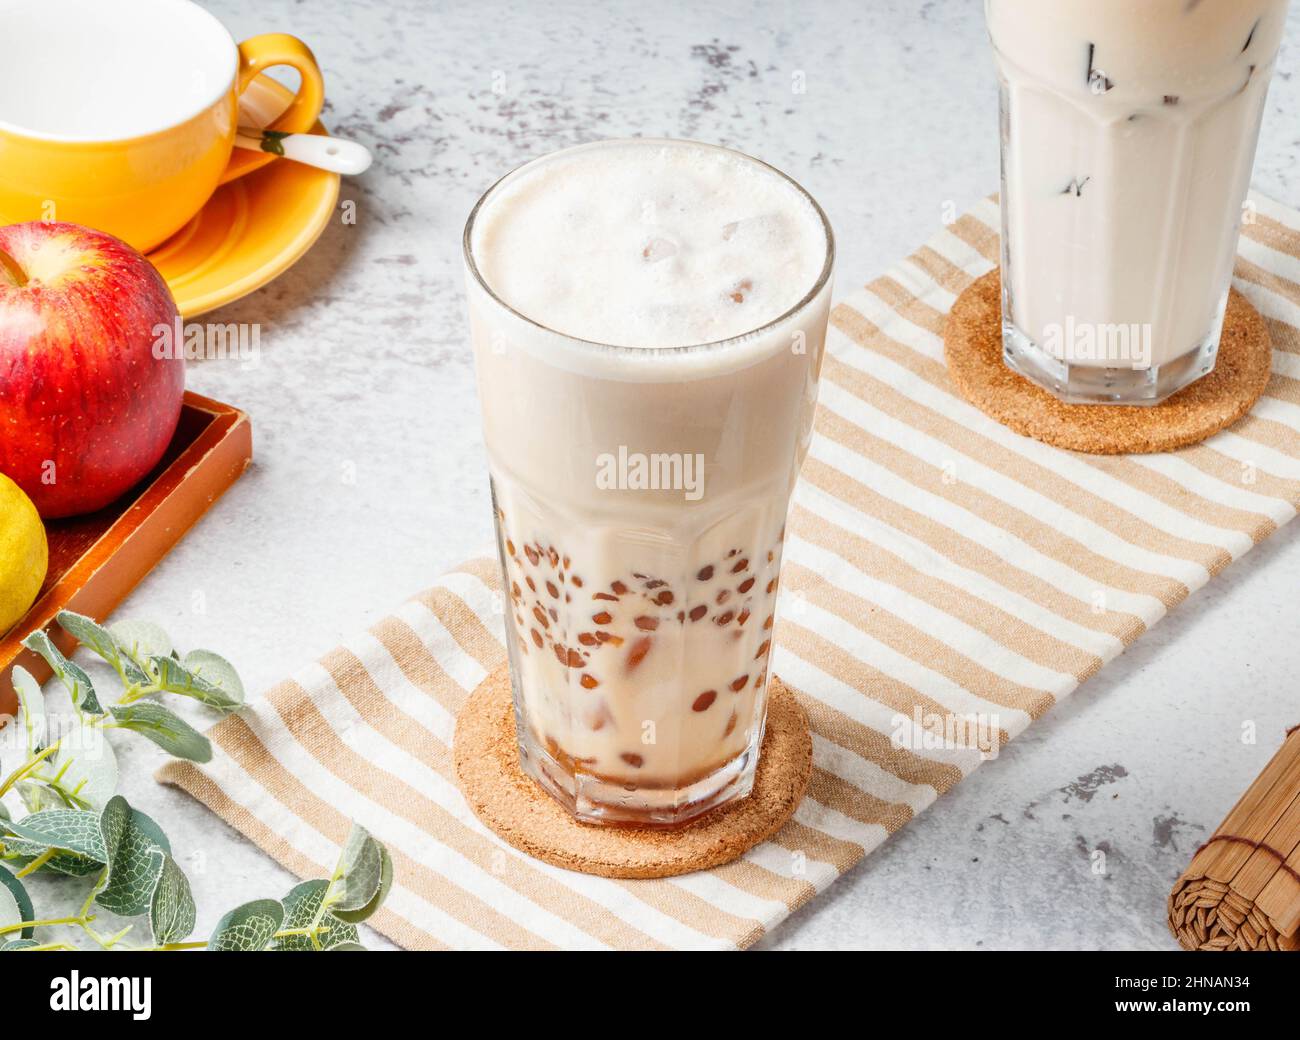 https://c8.alamy.com/comp/2HNAN34/pearl-milk-tea-boba-bubble-tea-in-glass-jar-on-mat-with-grey-background-breakfast-drink-2HNAN34.jpg